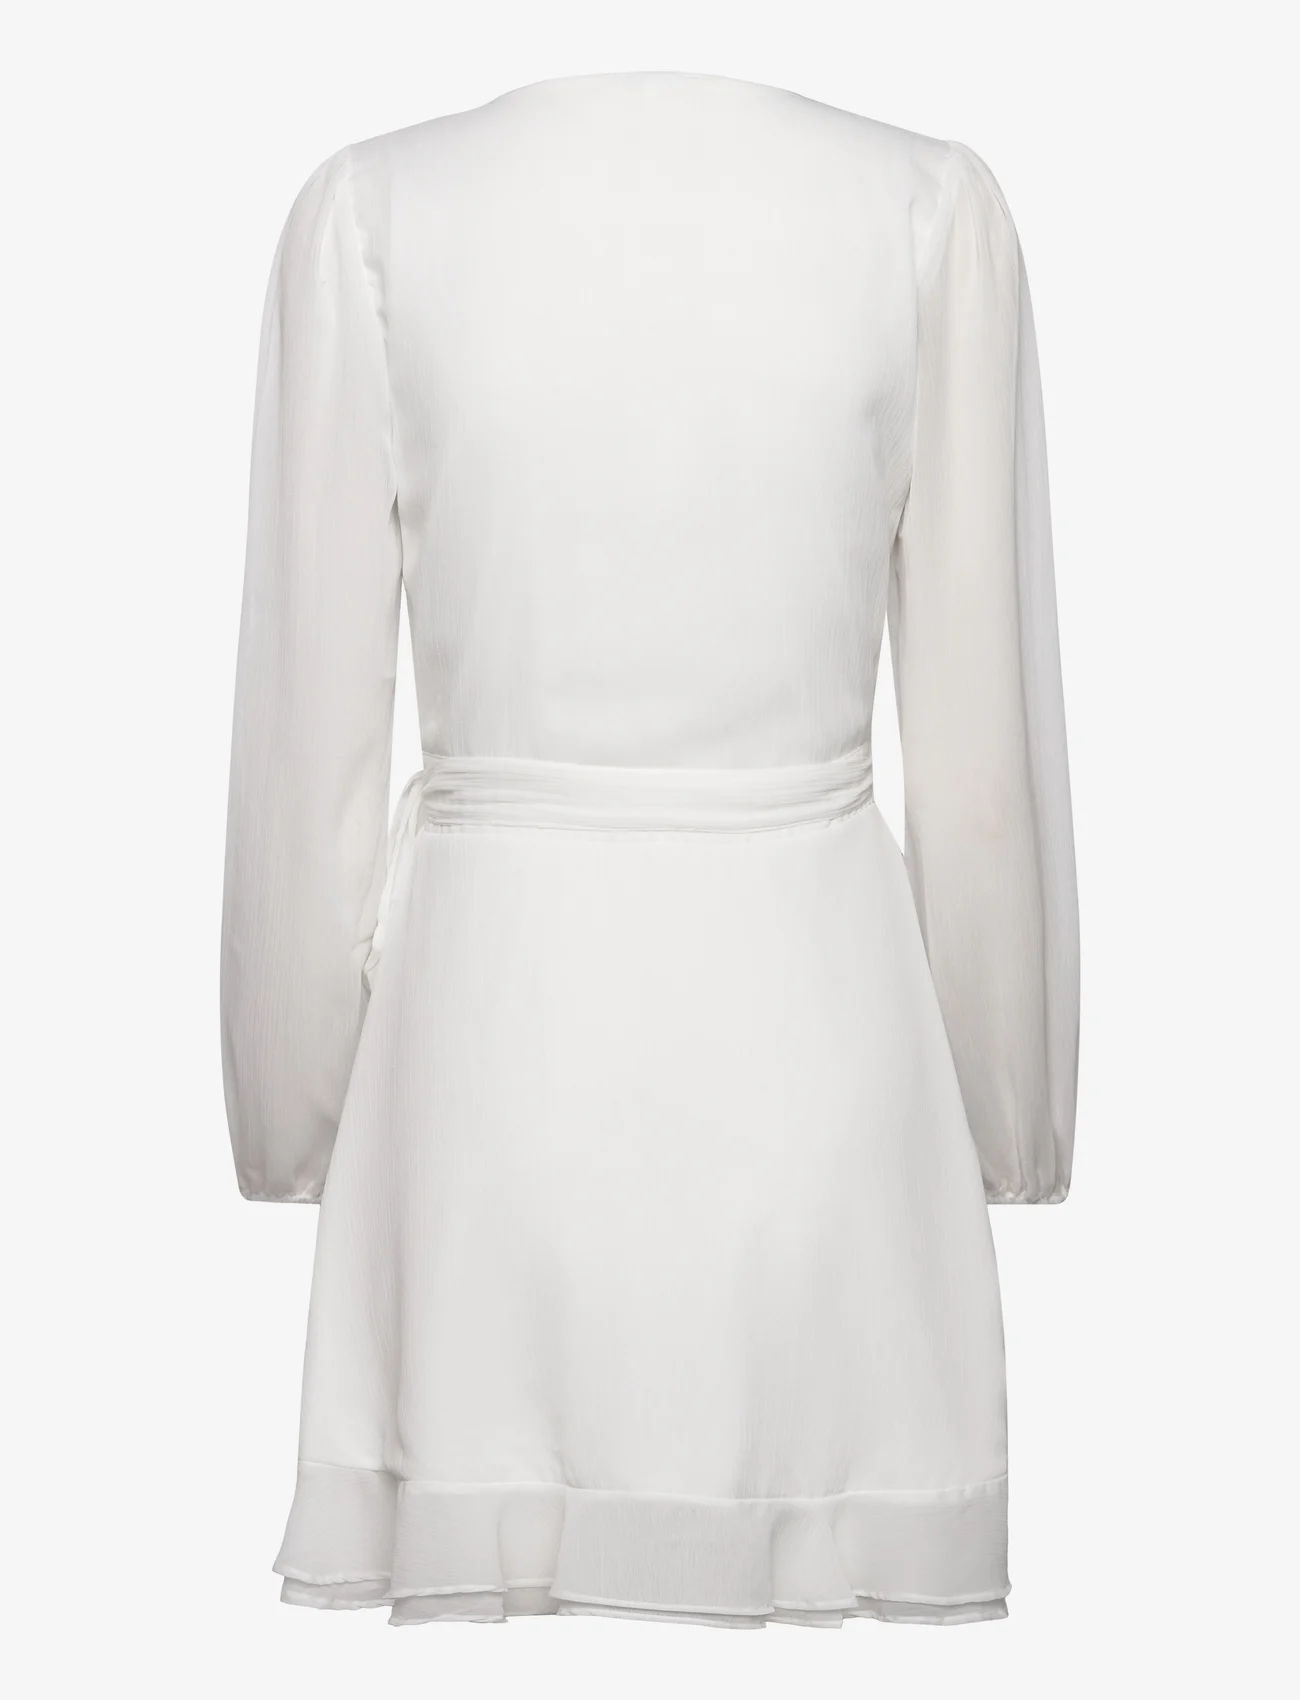 Bubbleroom - Kaira Chiffon Dress - white - 1